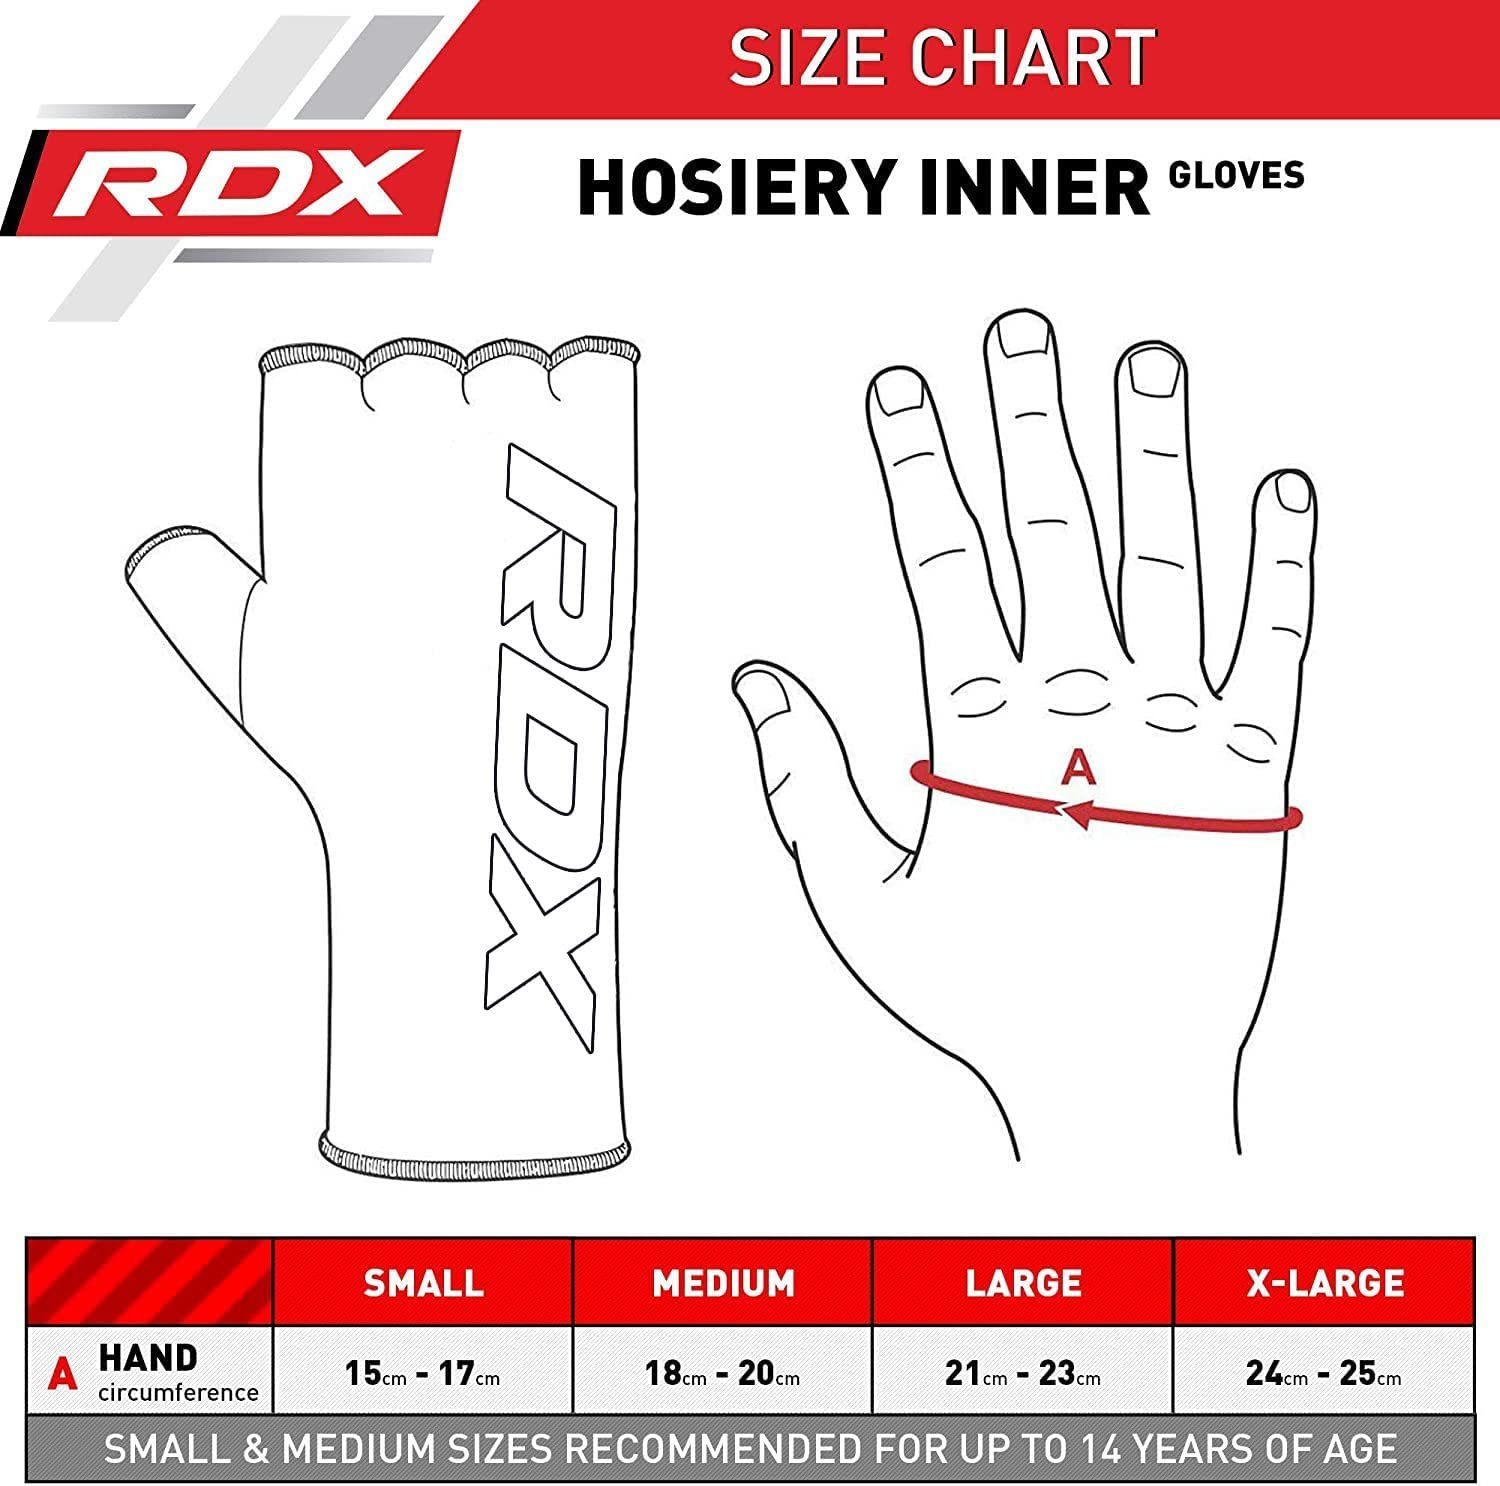 Sports Hand Training, Wraps Sparring Innere RDX Boxbandagen PINK RDX Boxen Boxbandagen Handschuhe